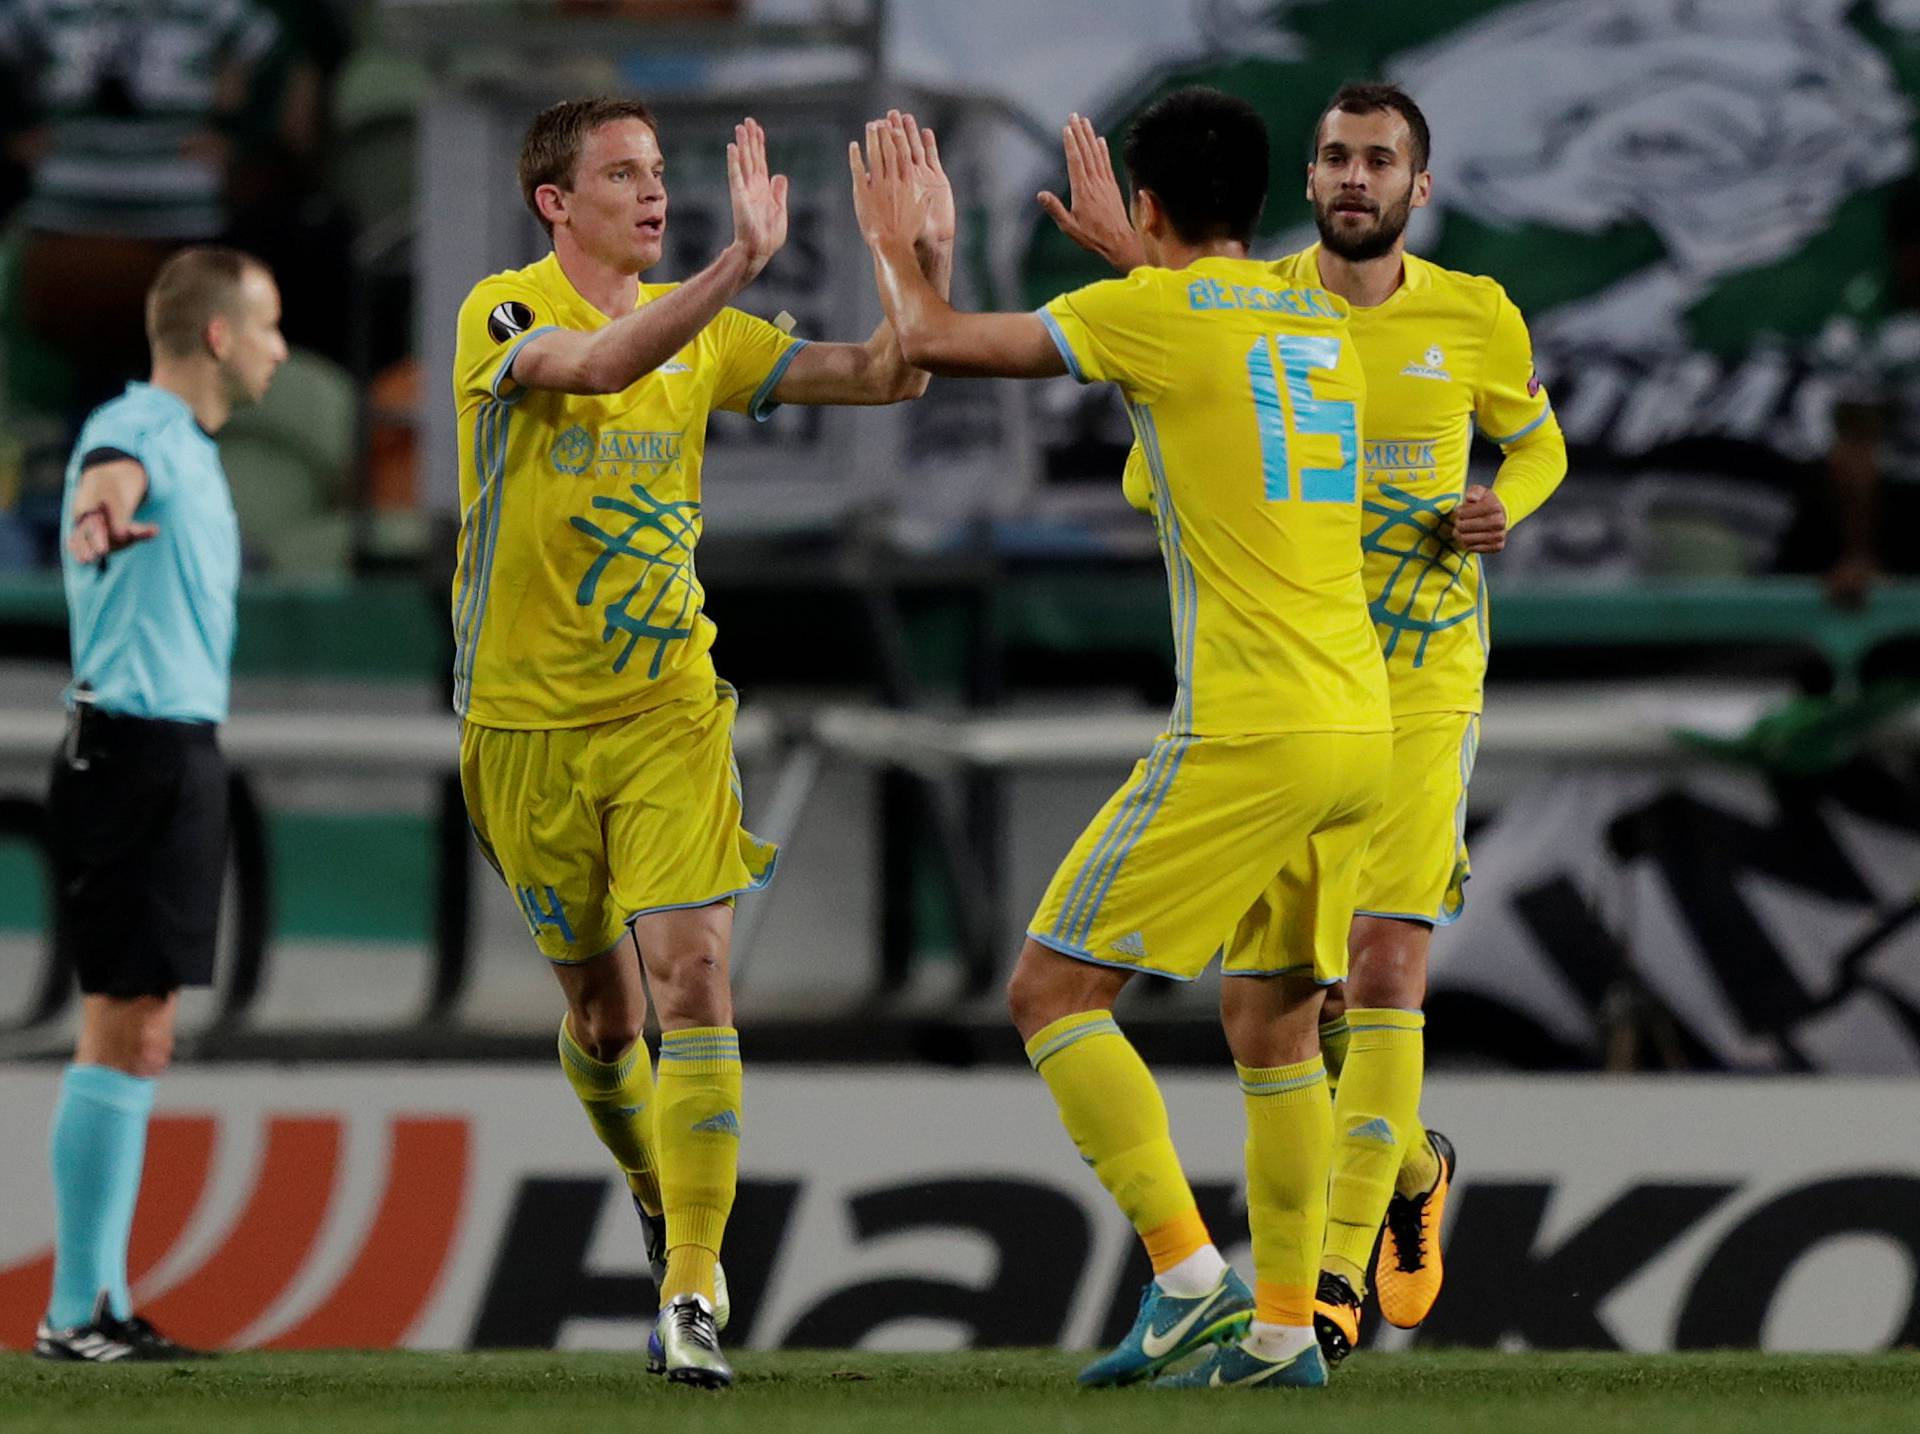 Europa League Round of 32 Second Leg - Sporting CP vs Astana